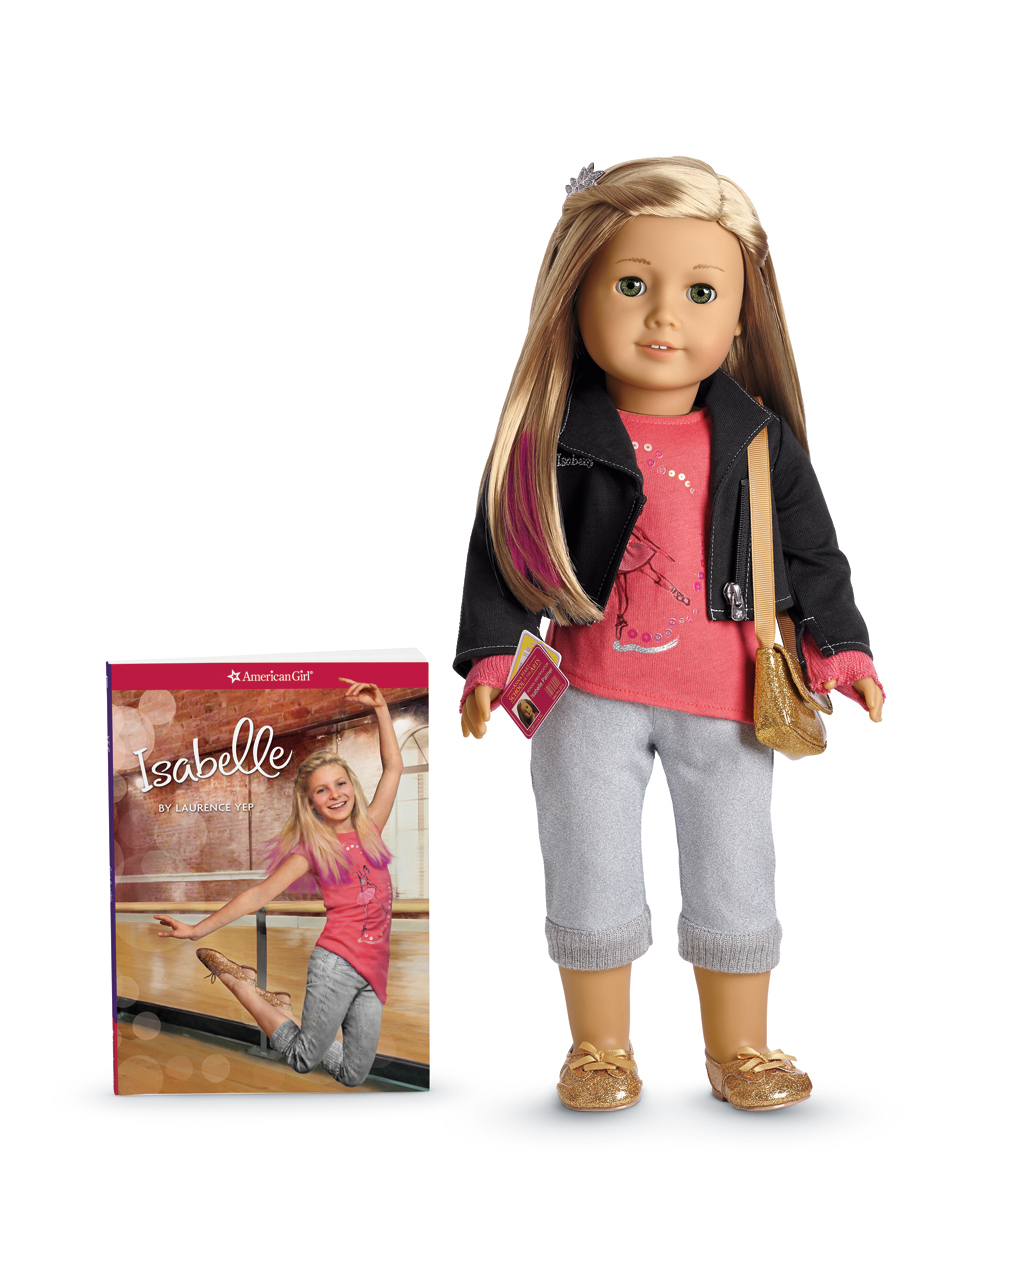 isabella american girl doll